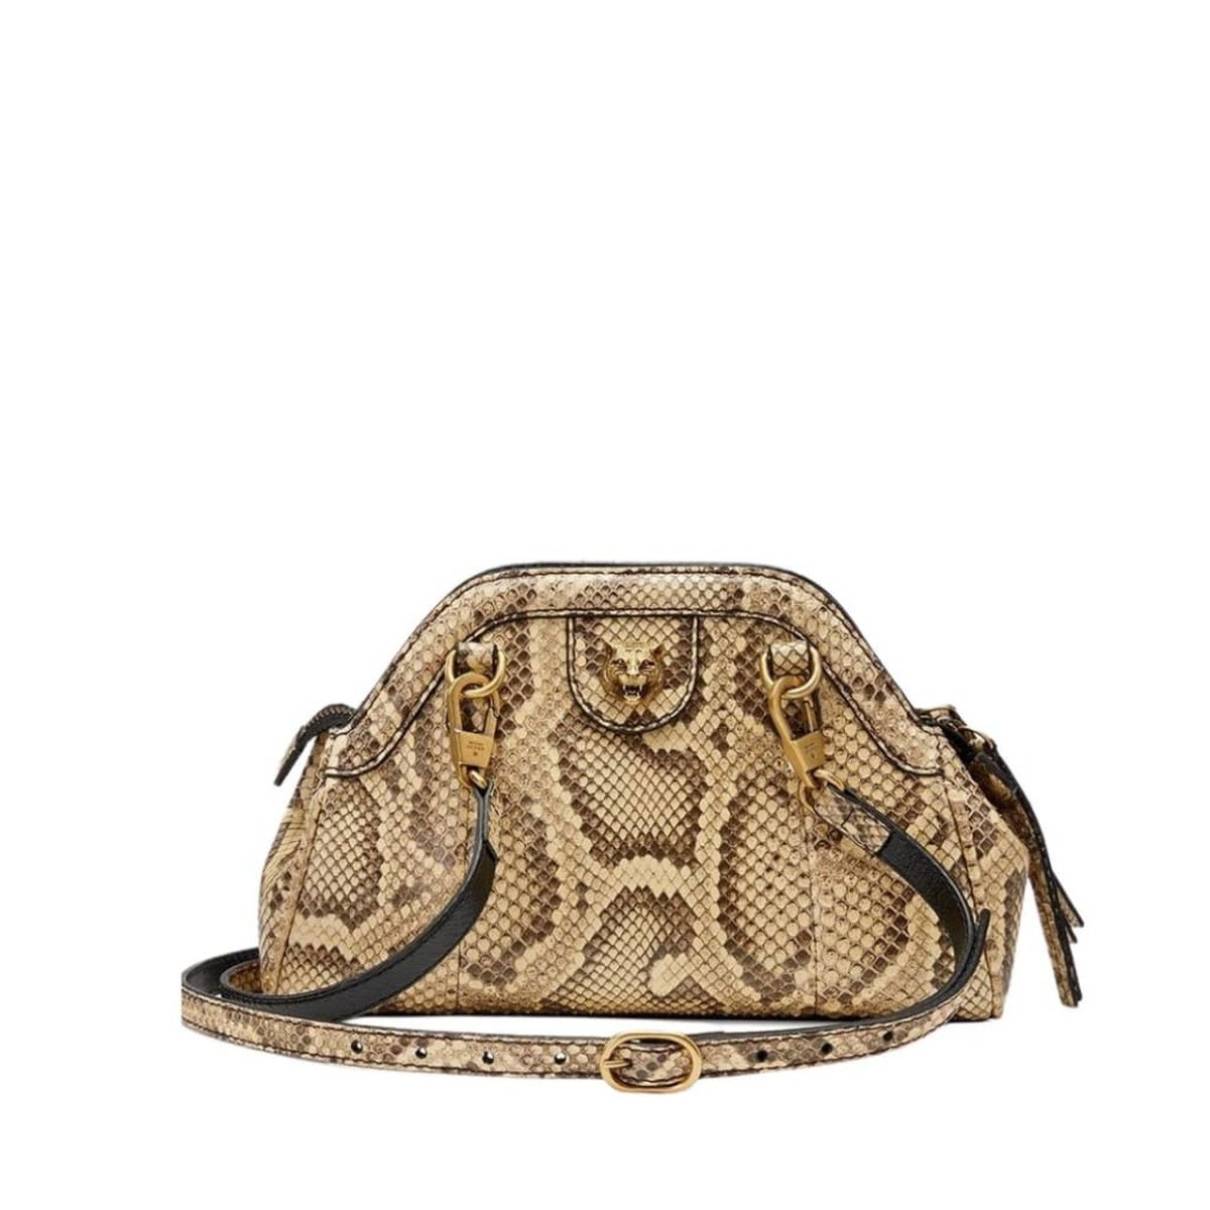 Buy Gucci Re(belle) python handbag online